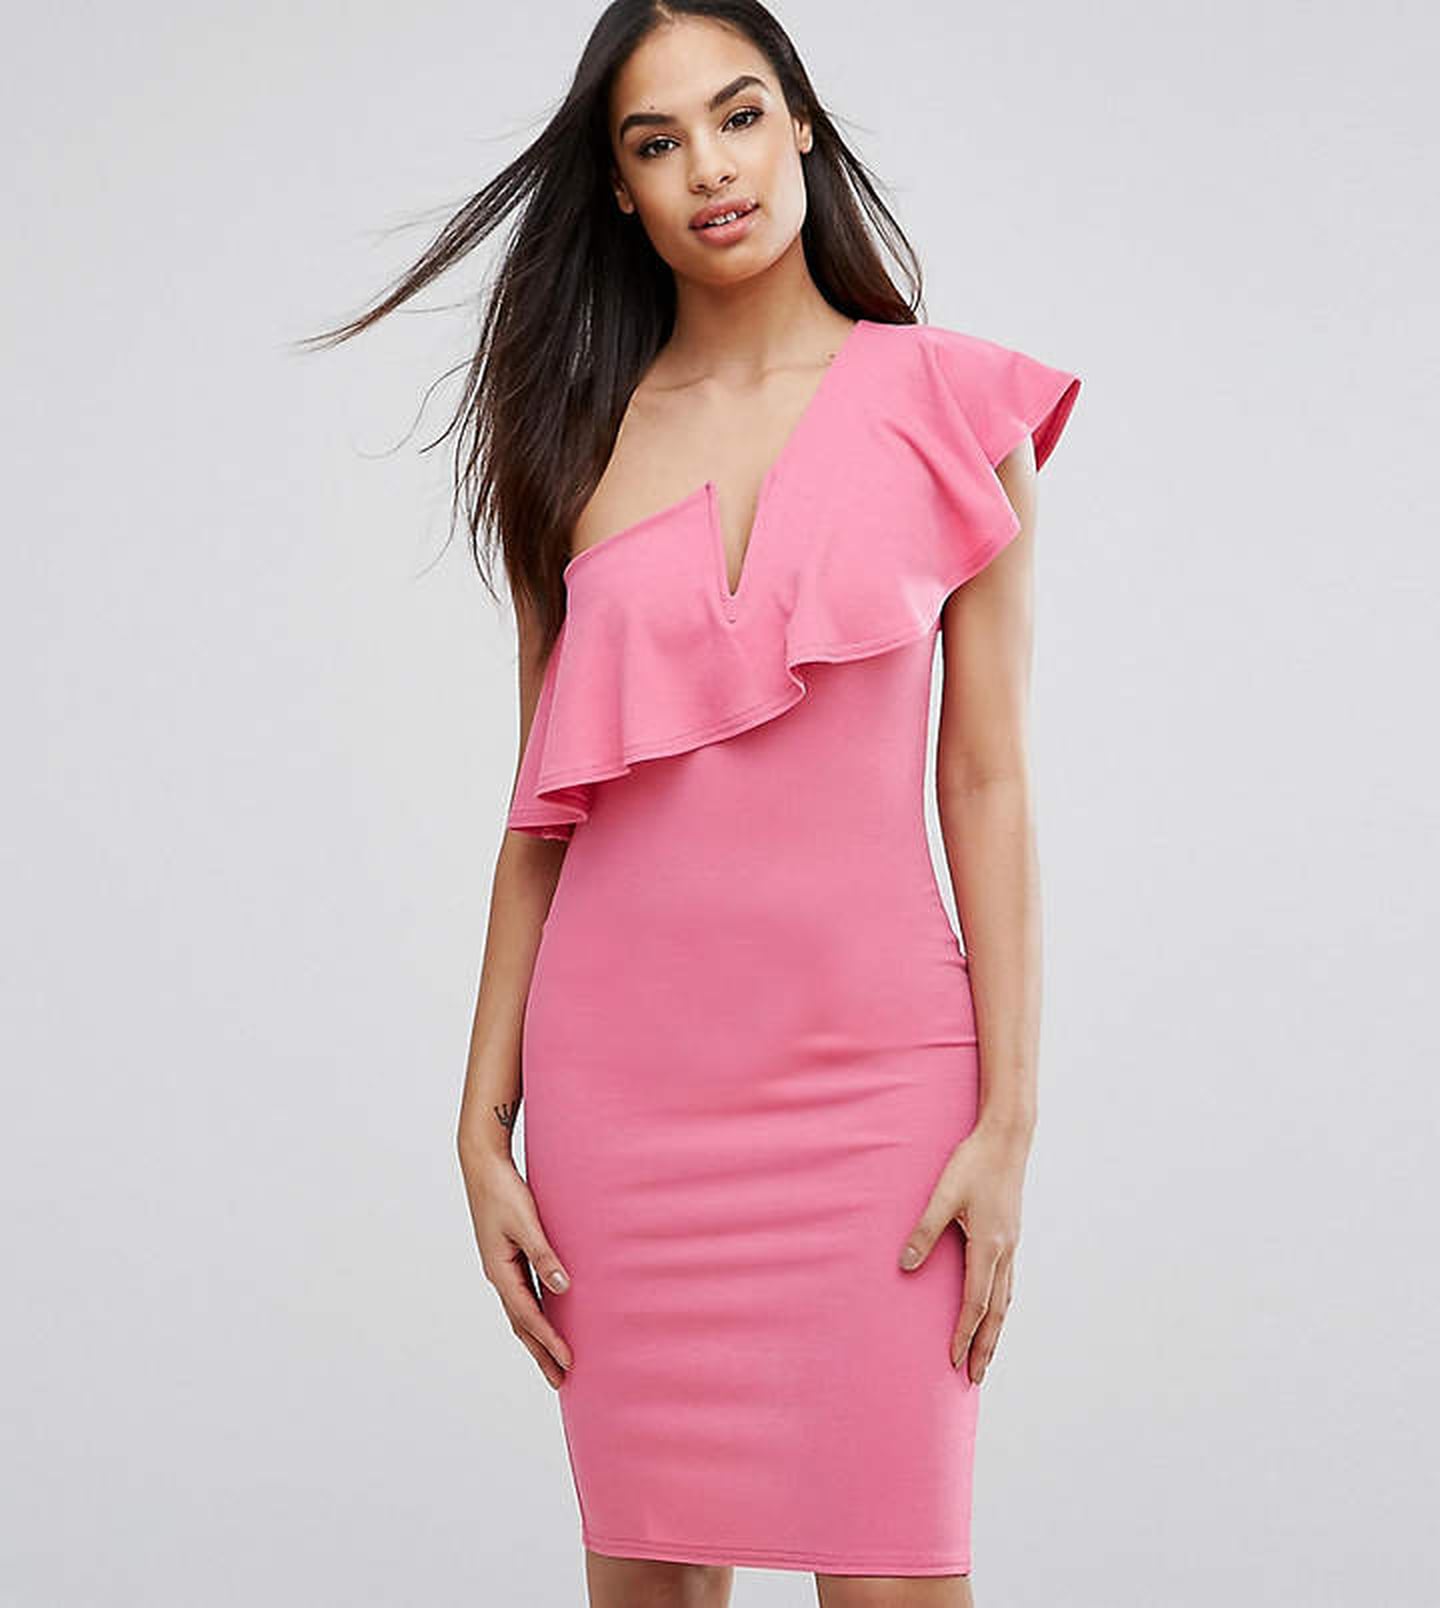 Beth's Pink Dress in This Is Us Wedding Scene | POPSUGAR Fashion